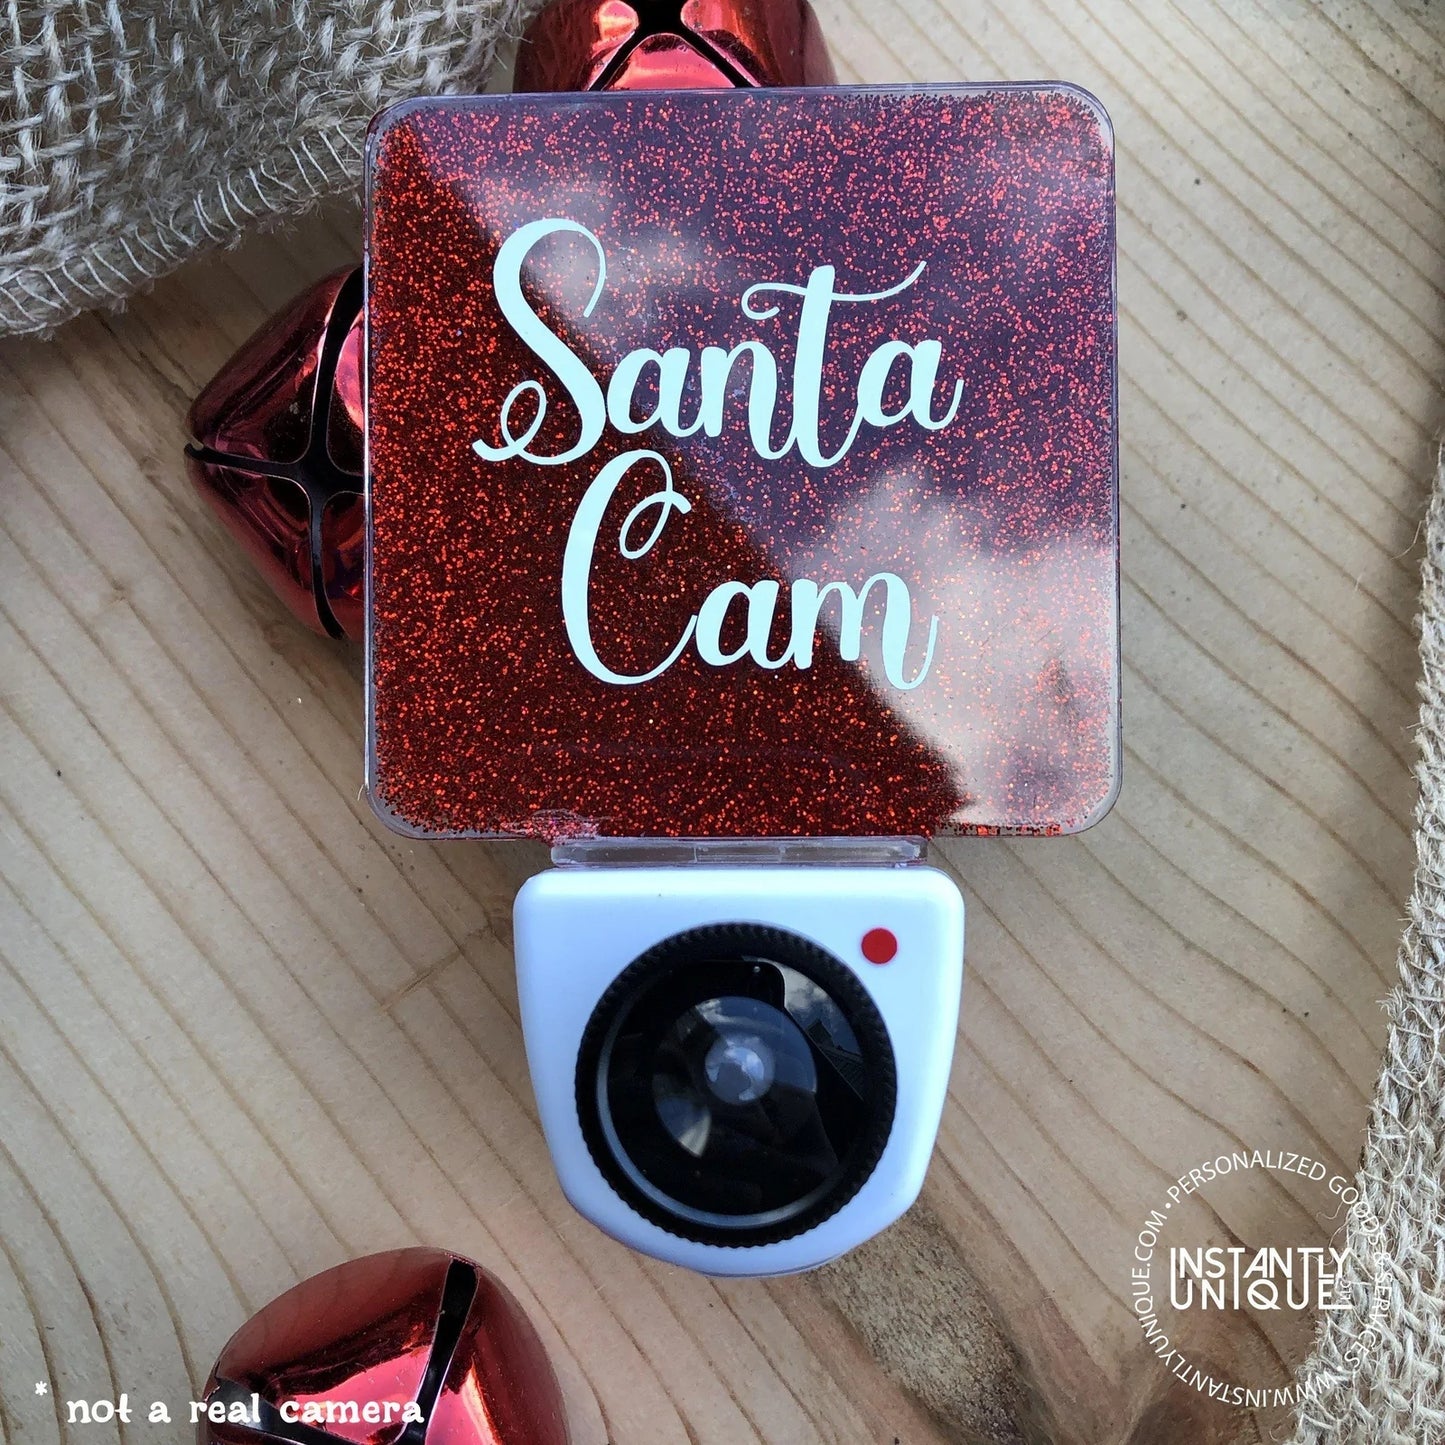 Santa Cam Night Light - Spy Cam Night Light for Kids - Ready to Ship